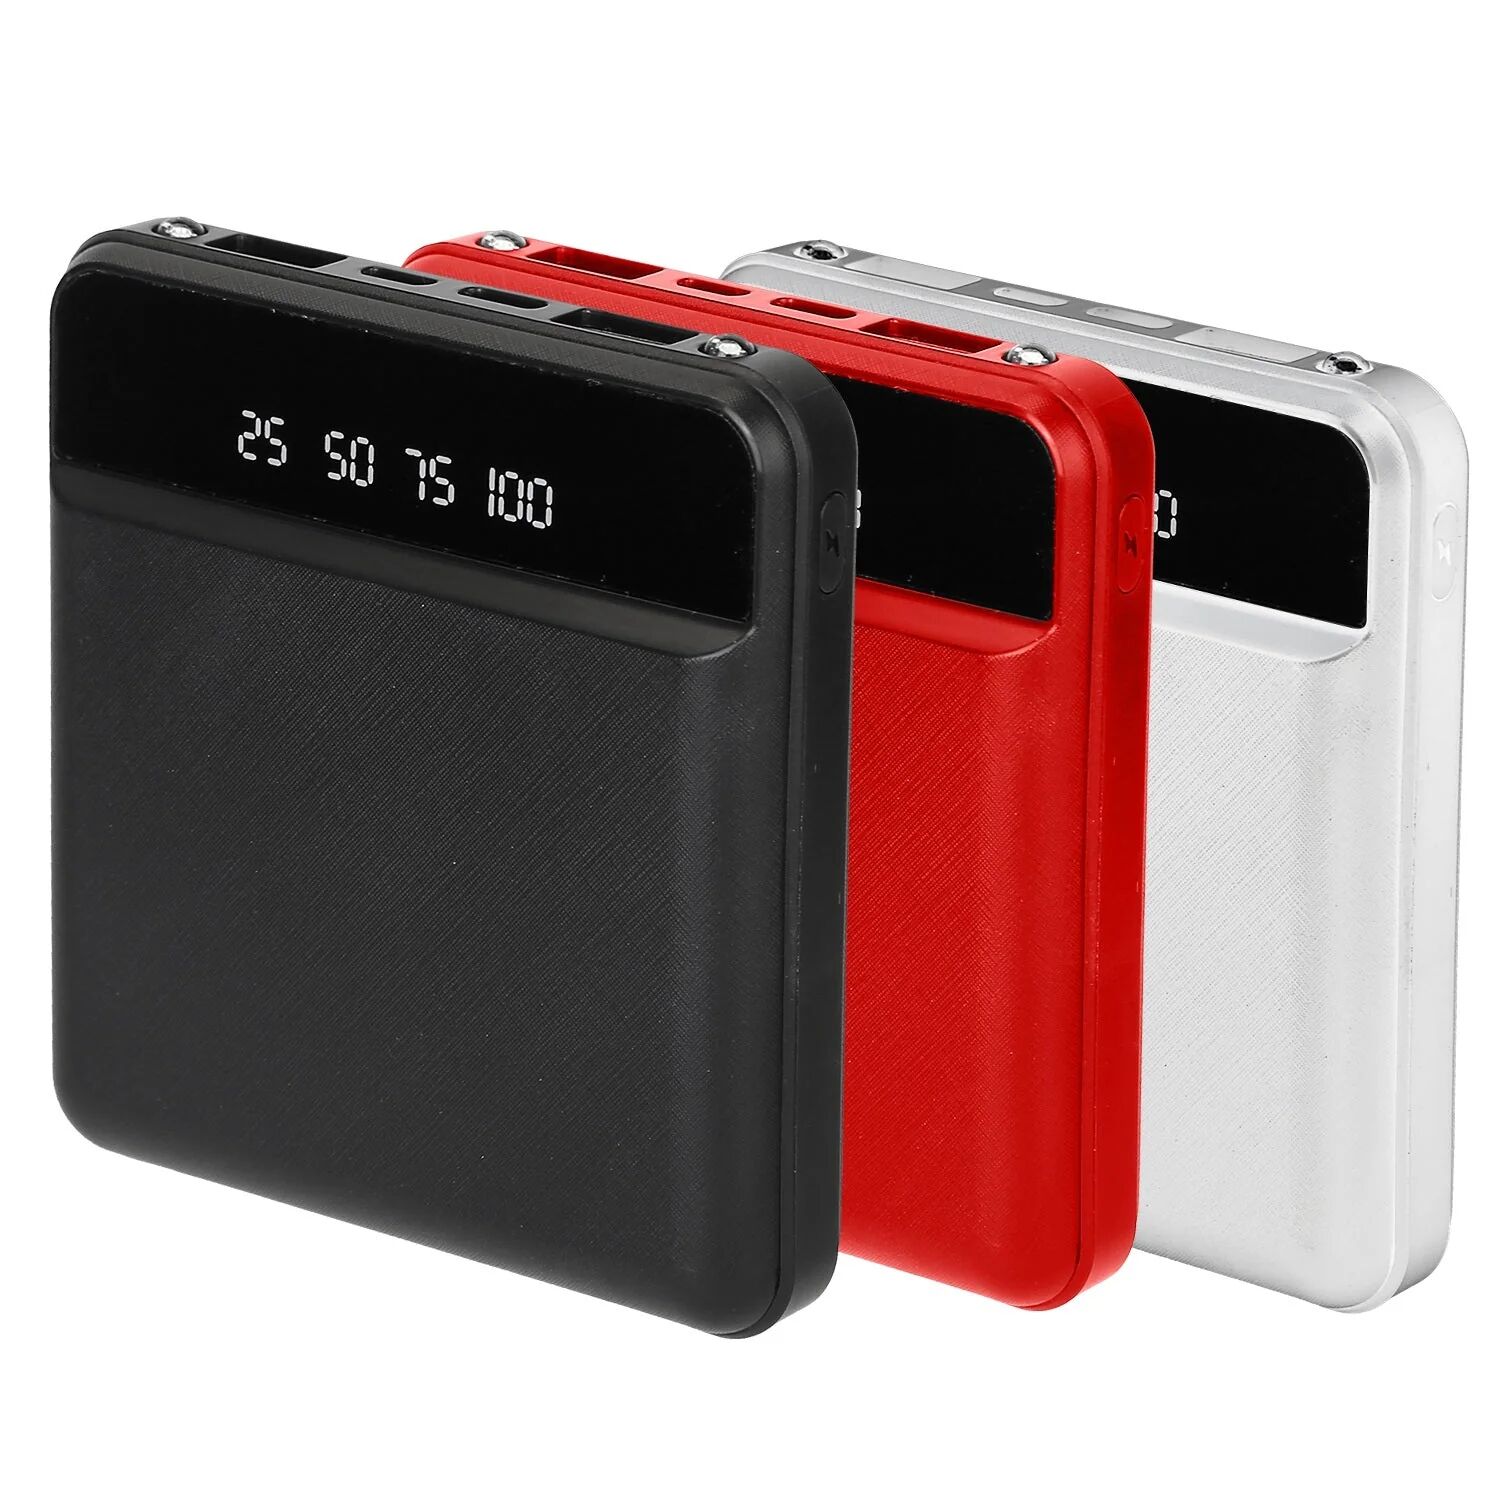 DailySale 10000 mAh Portable Powerbank Mini with Dual USB Ports LCD Display